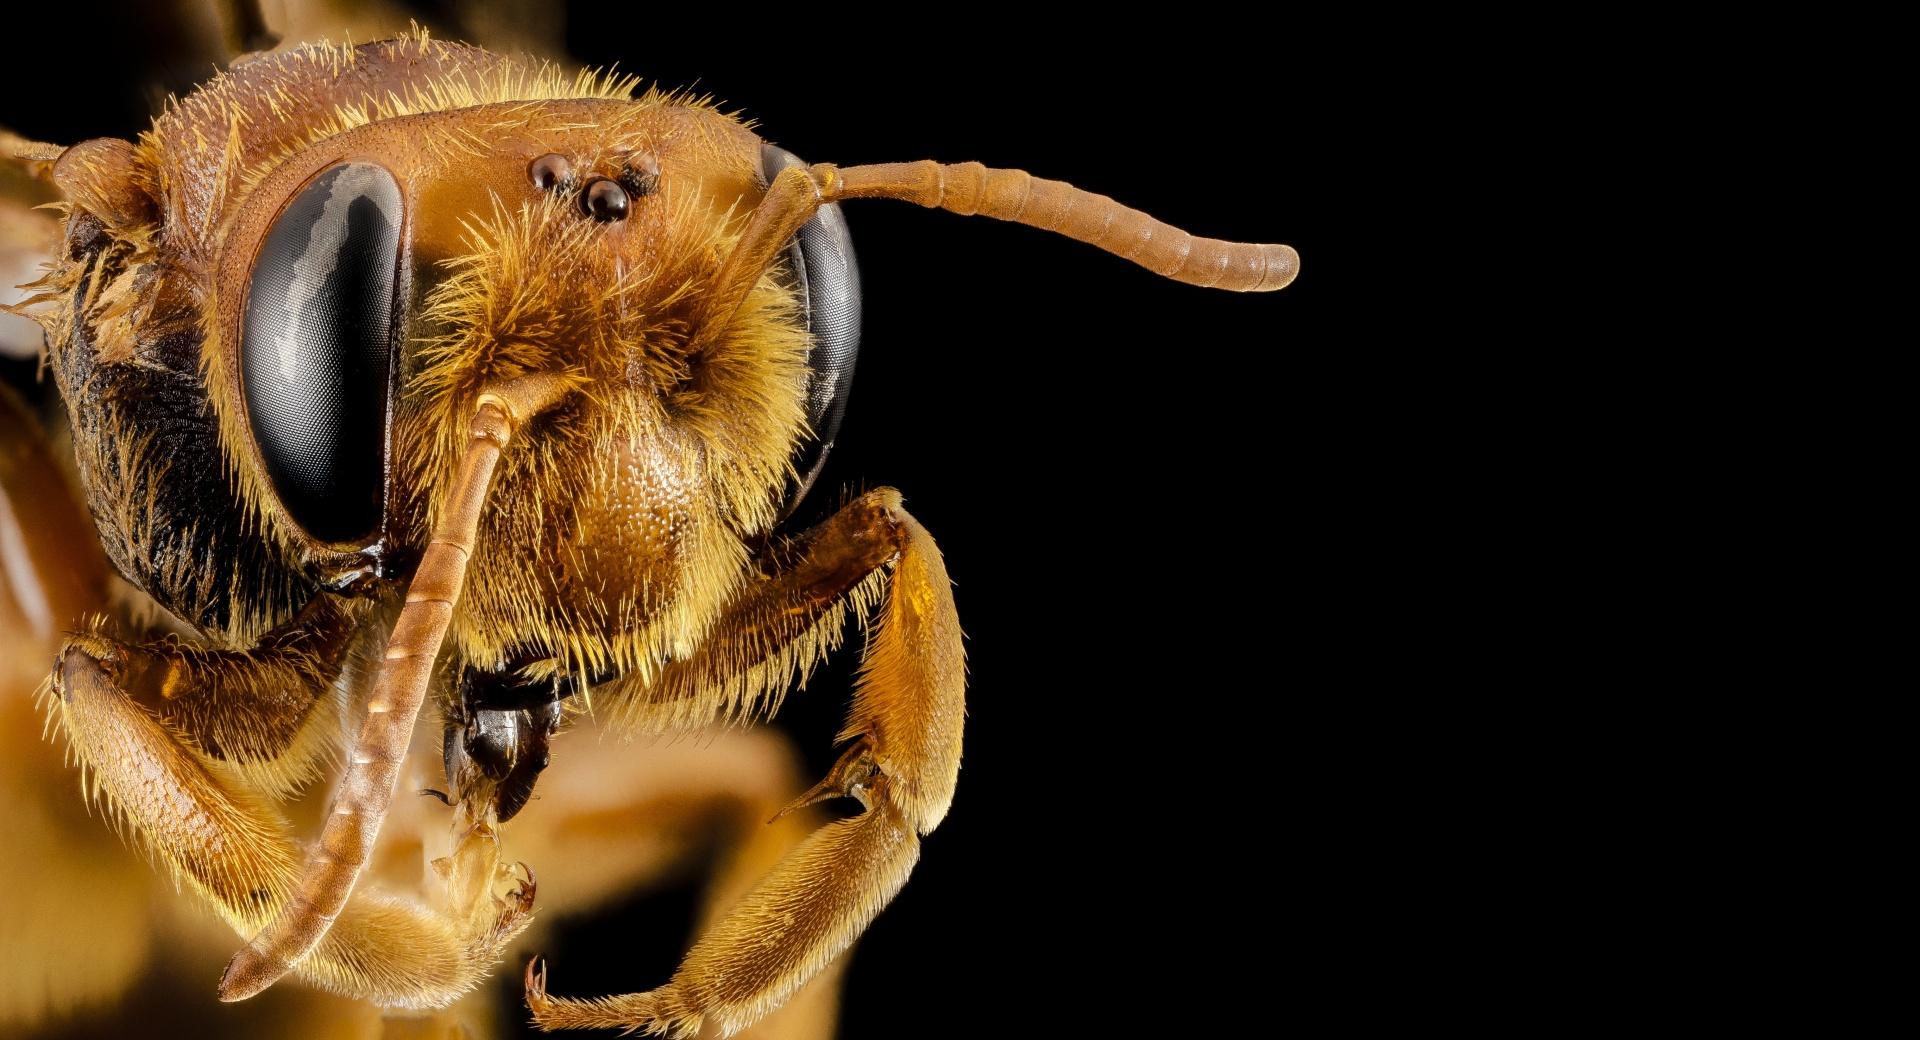 Andrena Bee Head Macro, Oman at 1024 x 1024 iPad size wallpapers HD quality